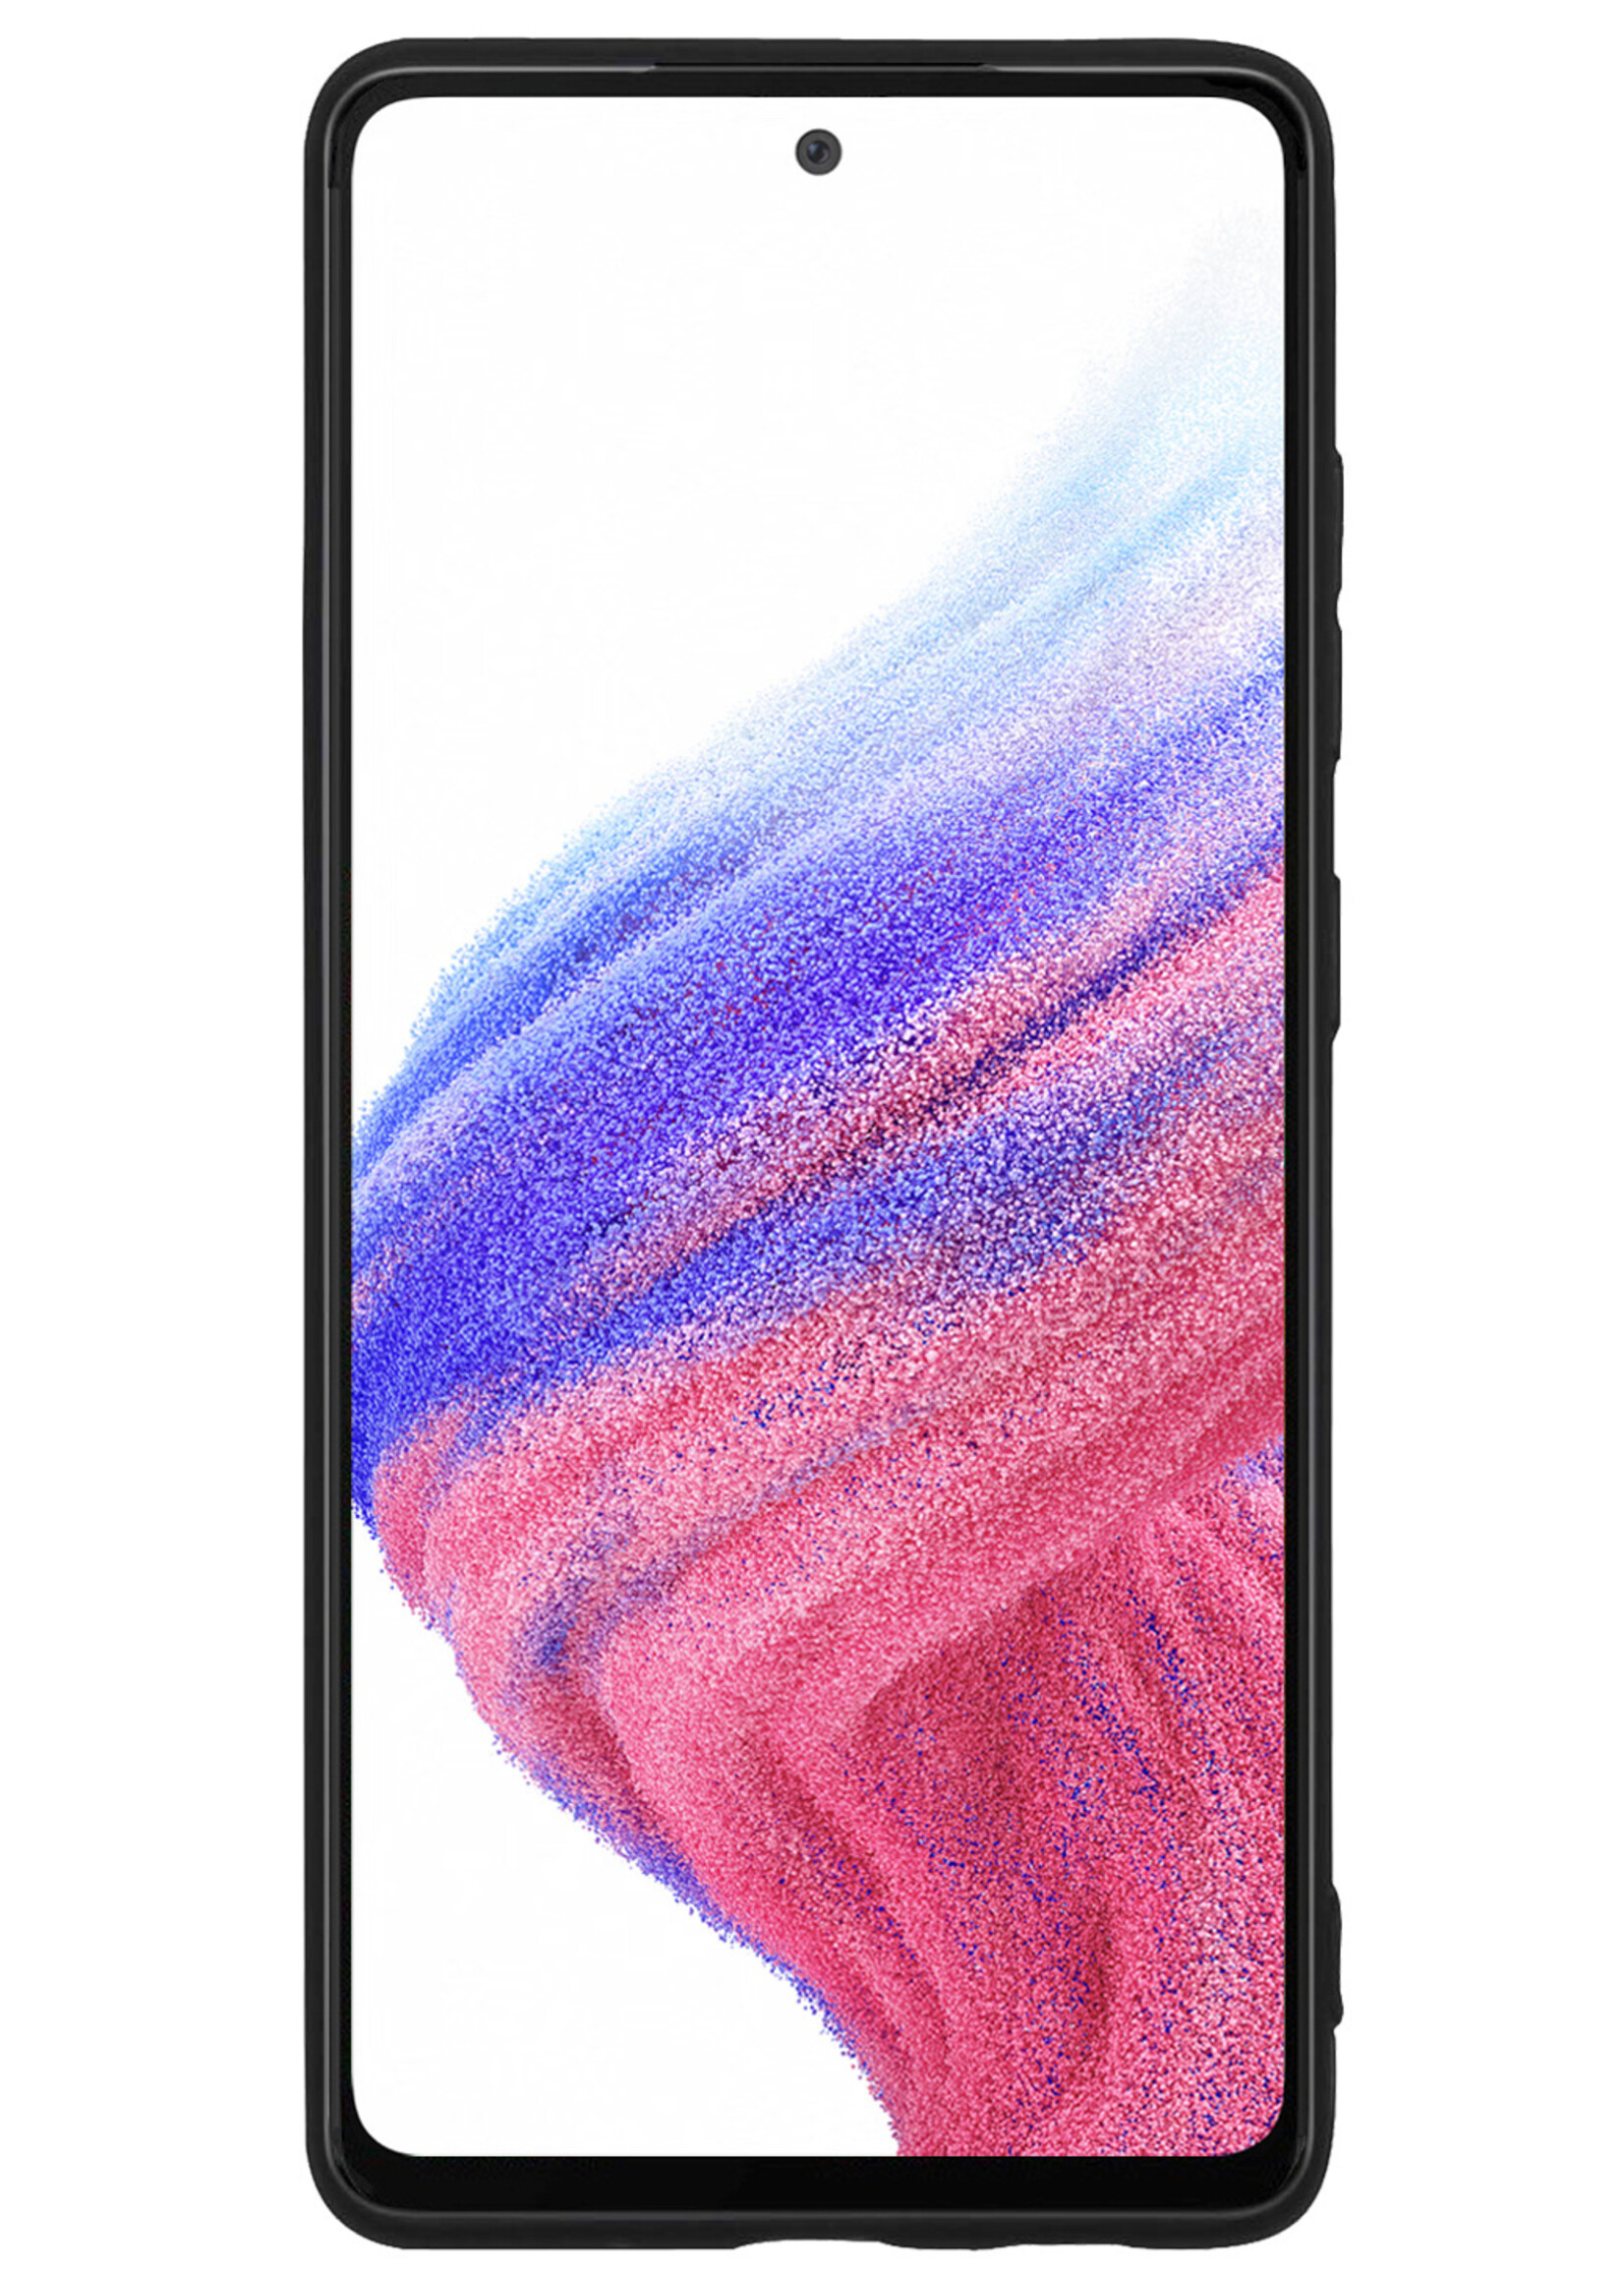 BTH Hoesje Geschikt voor Samsung A53 Hoesje Siliconen Case Hoes - Hoes Geschikt voor Samsung Galaxy A53 Hoes Cover Case - Zwart - 2 PACK